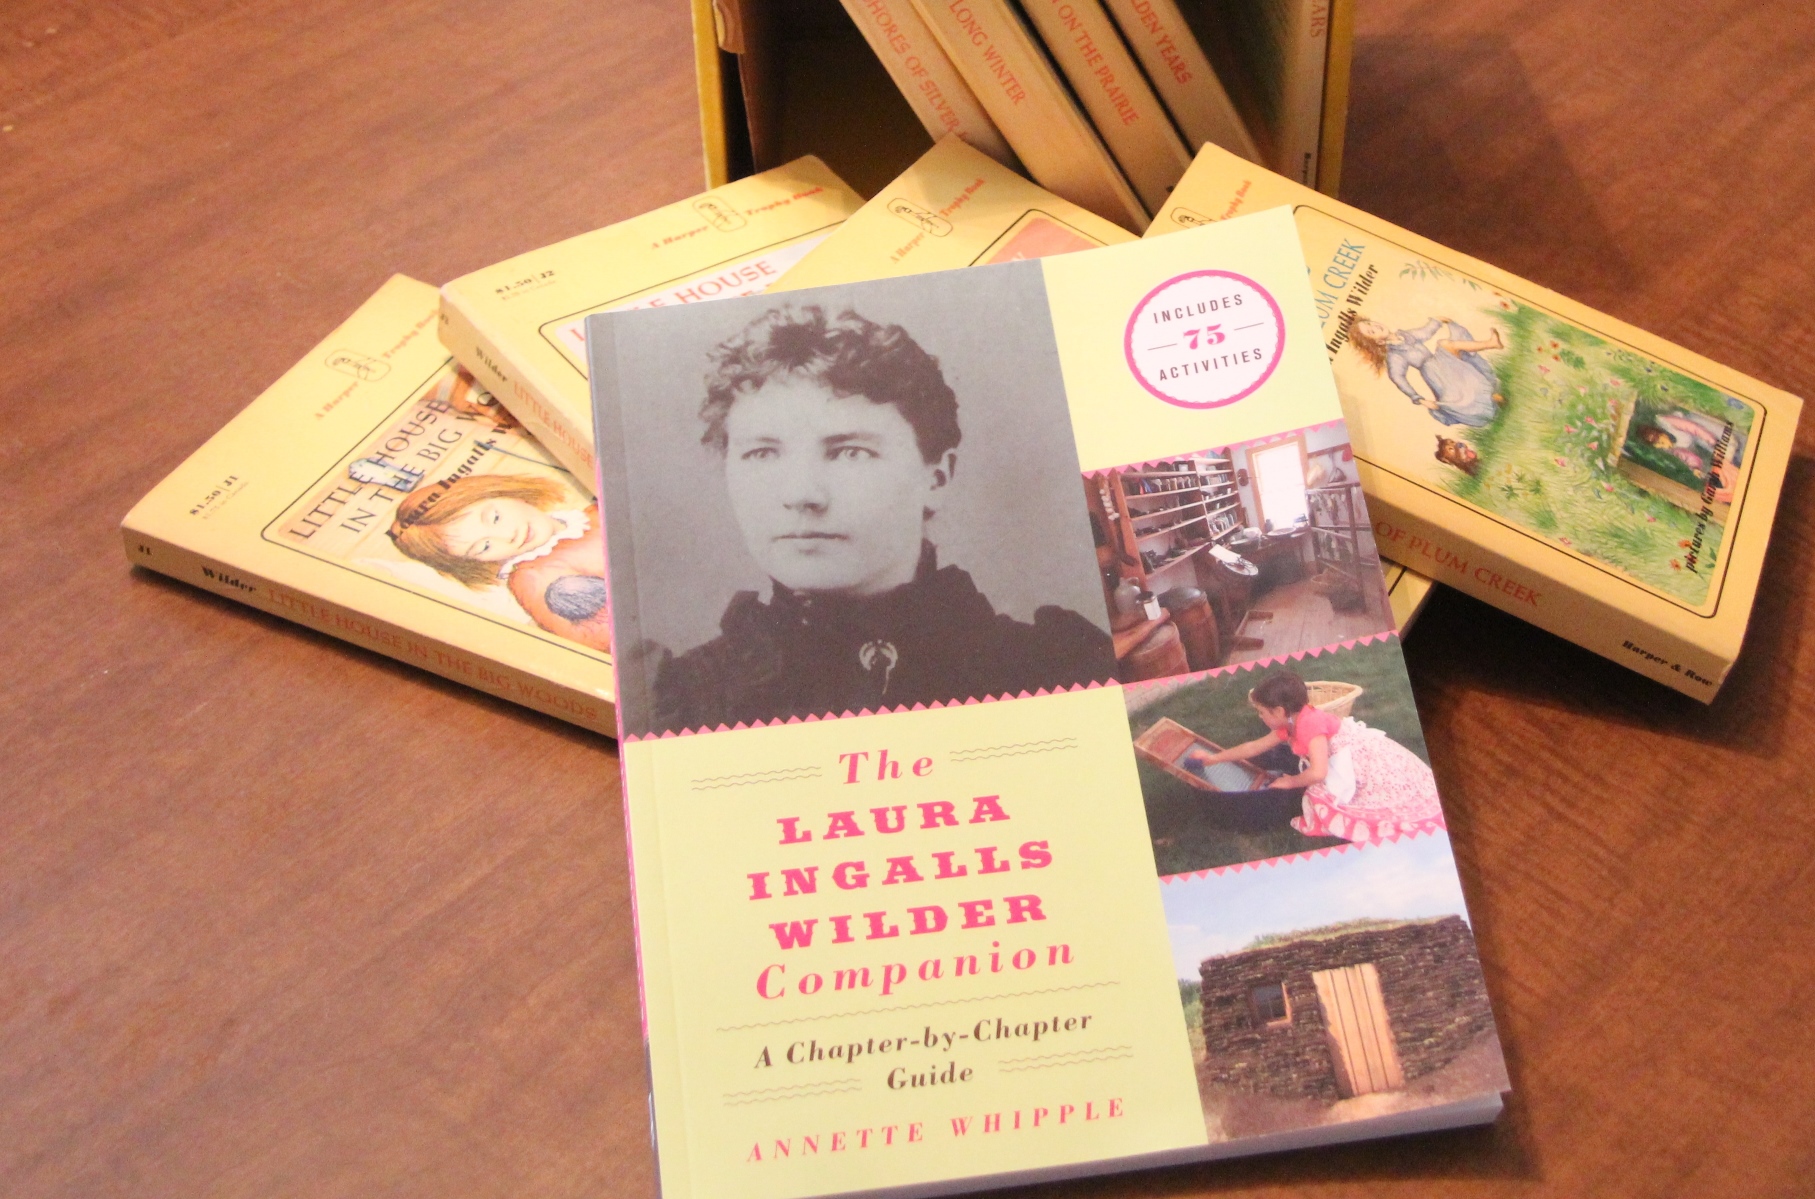 Book: The Laura Ingalls Wilder Companion